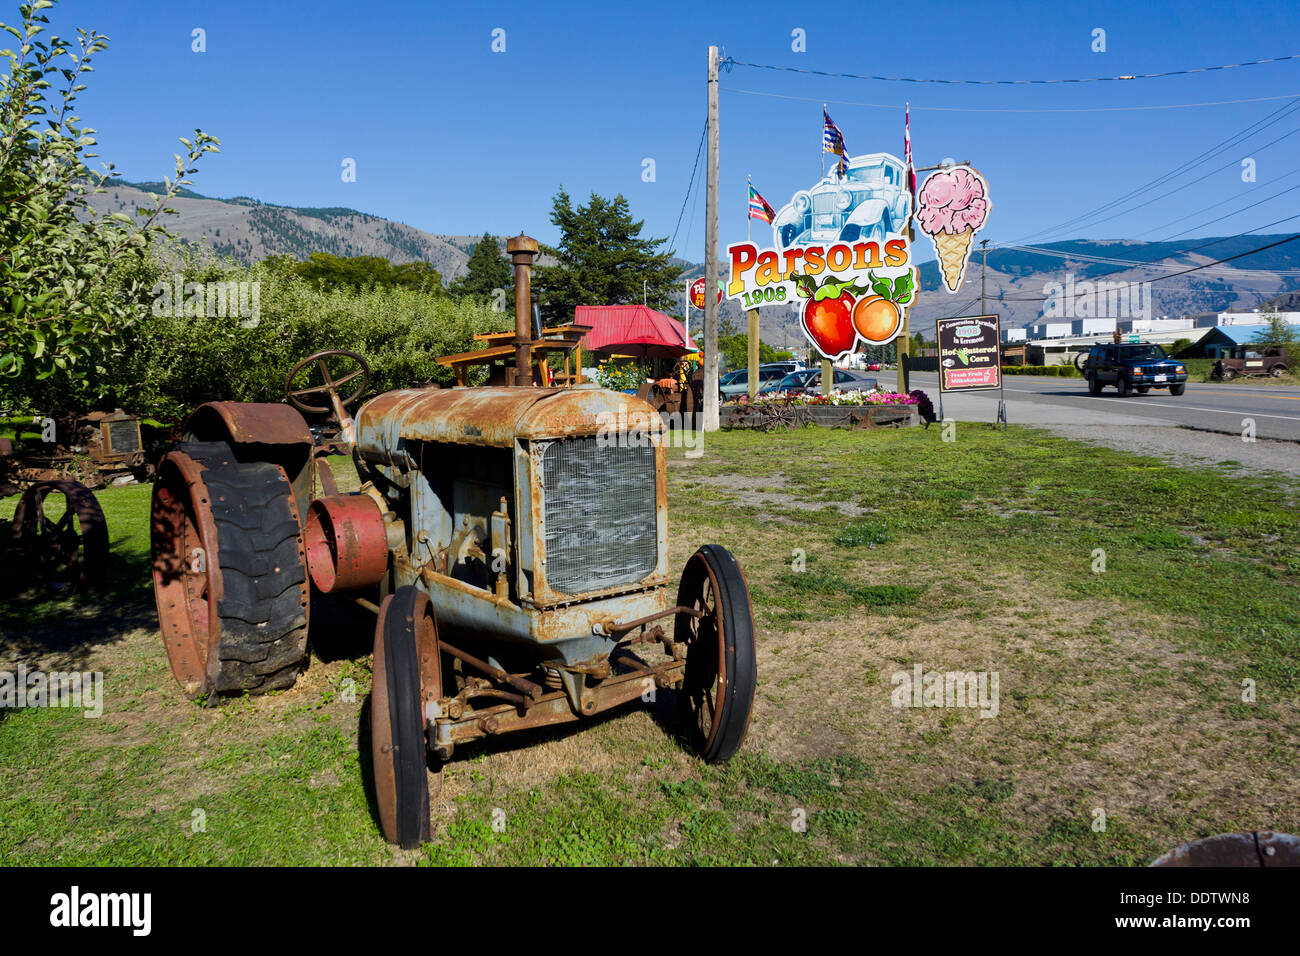 Classic McCormick-Deering trattore agricolo Parsons frutta stand. Keremeos, regione Okanagan-Similkameen, British Columbia, Canada. Foto Stock